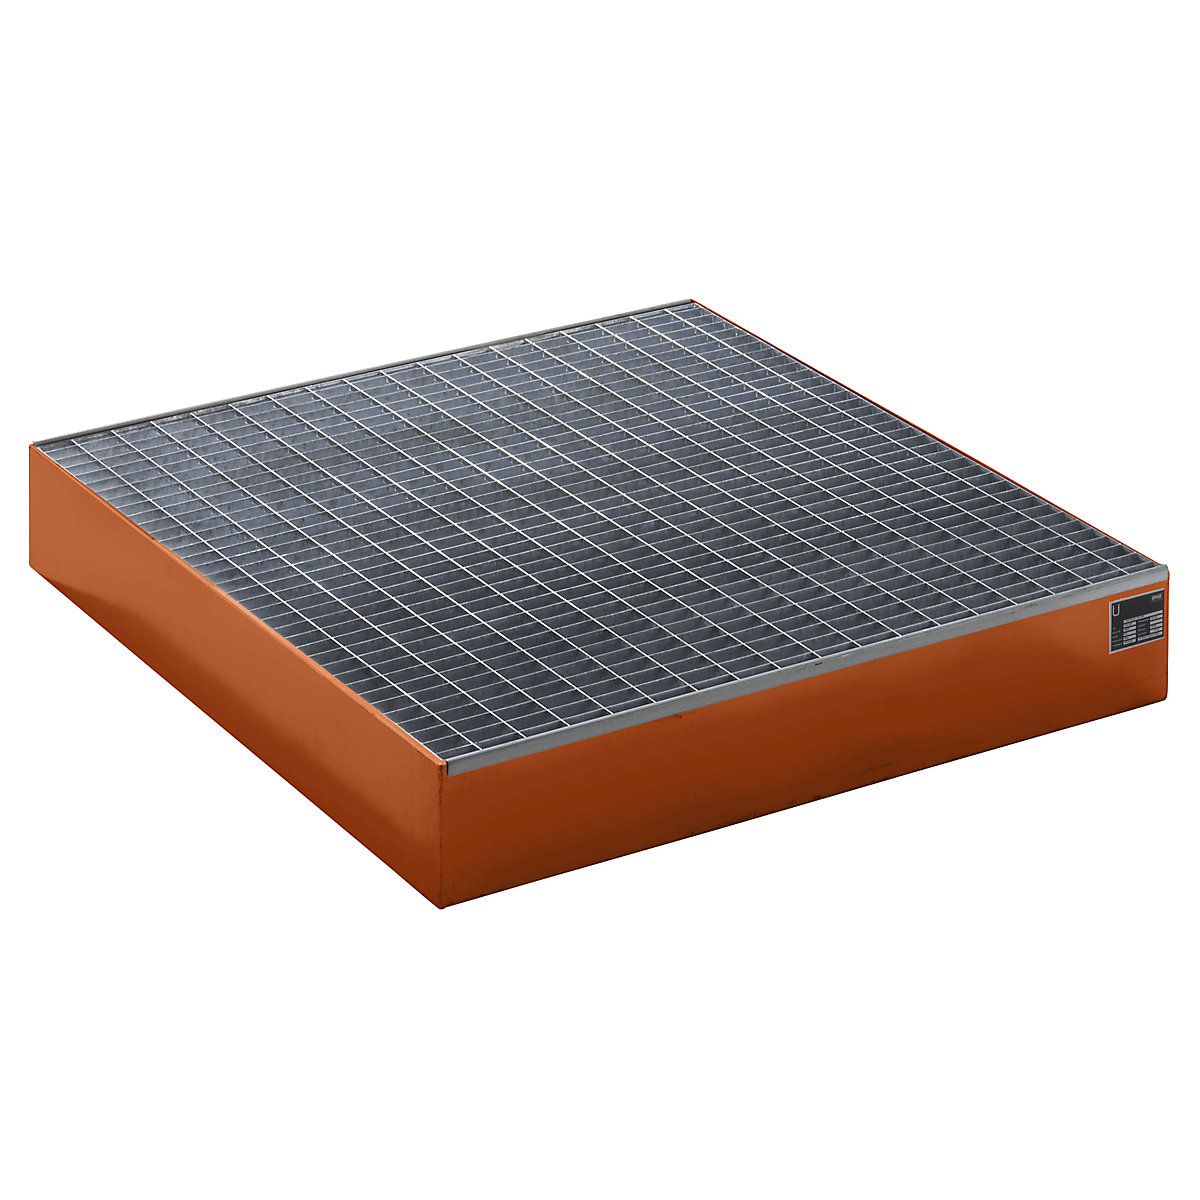 EUROKRAFTbasic – Pallet sump tray, LxWxH 1200 x 1200 x 185 mm, orange RAL 2000, with grate